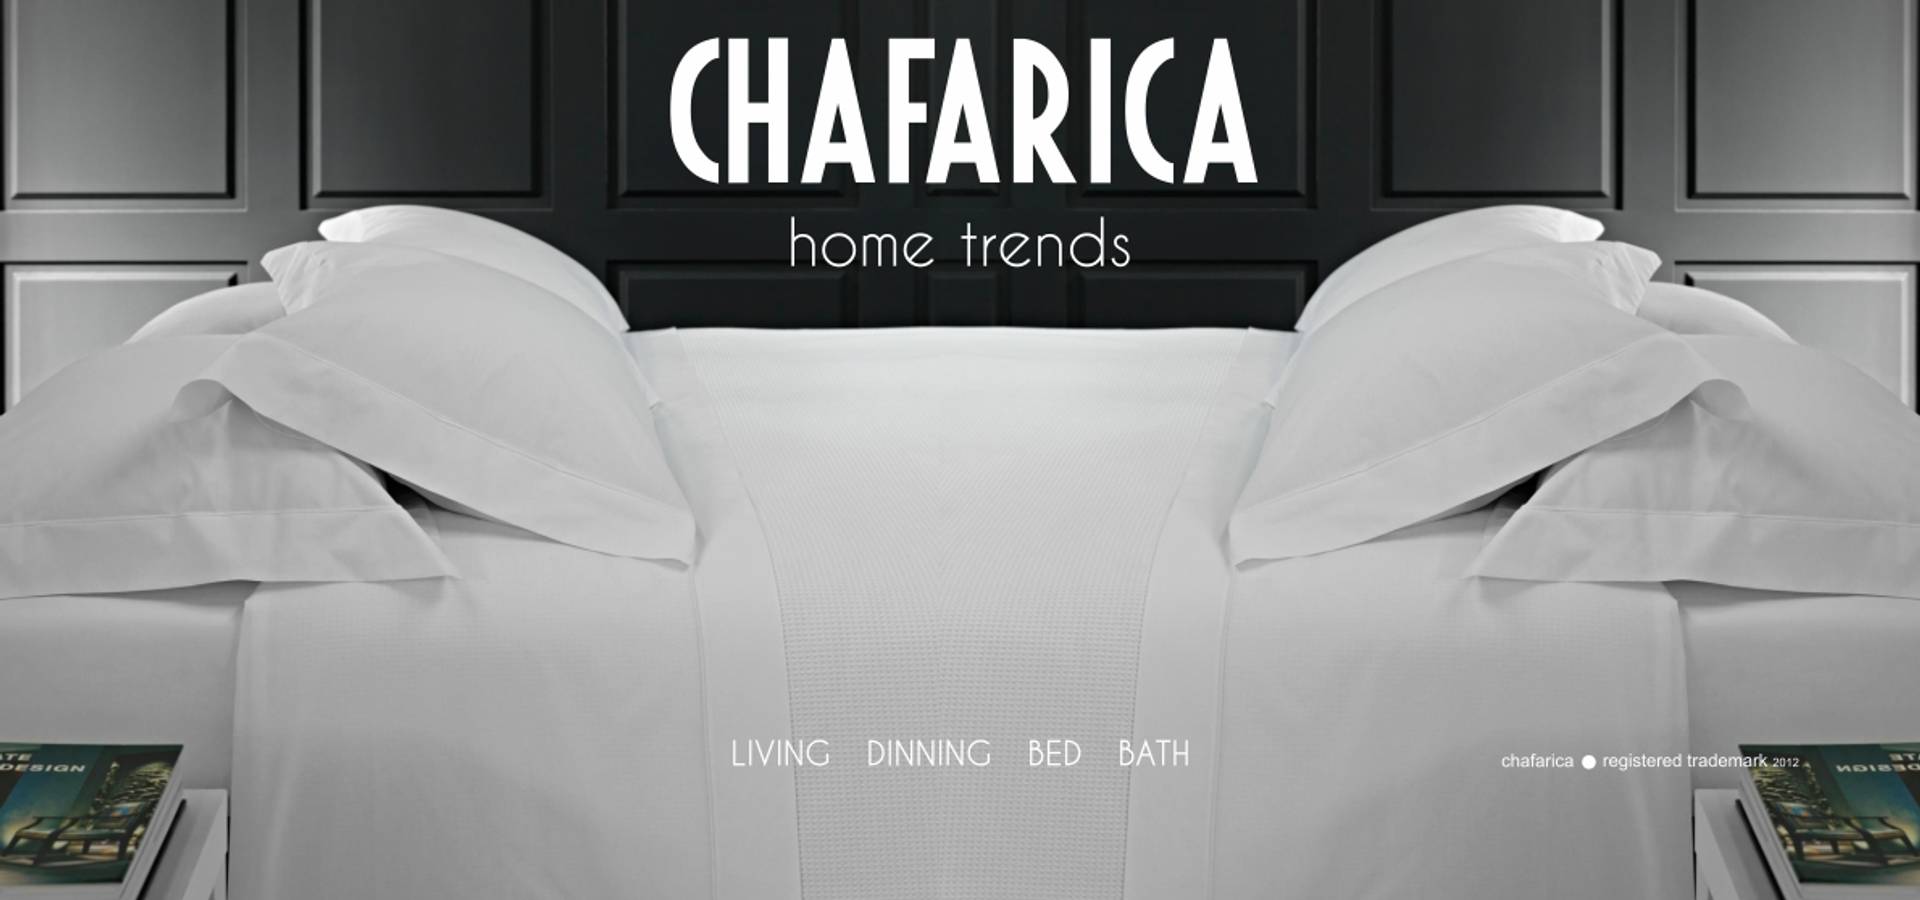 Chafarica